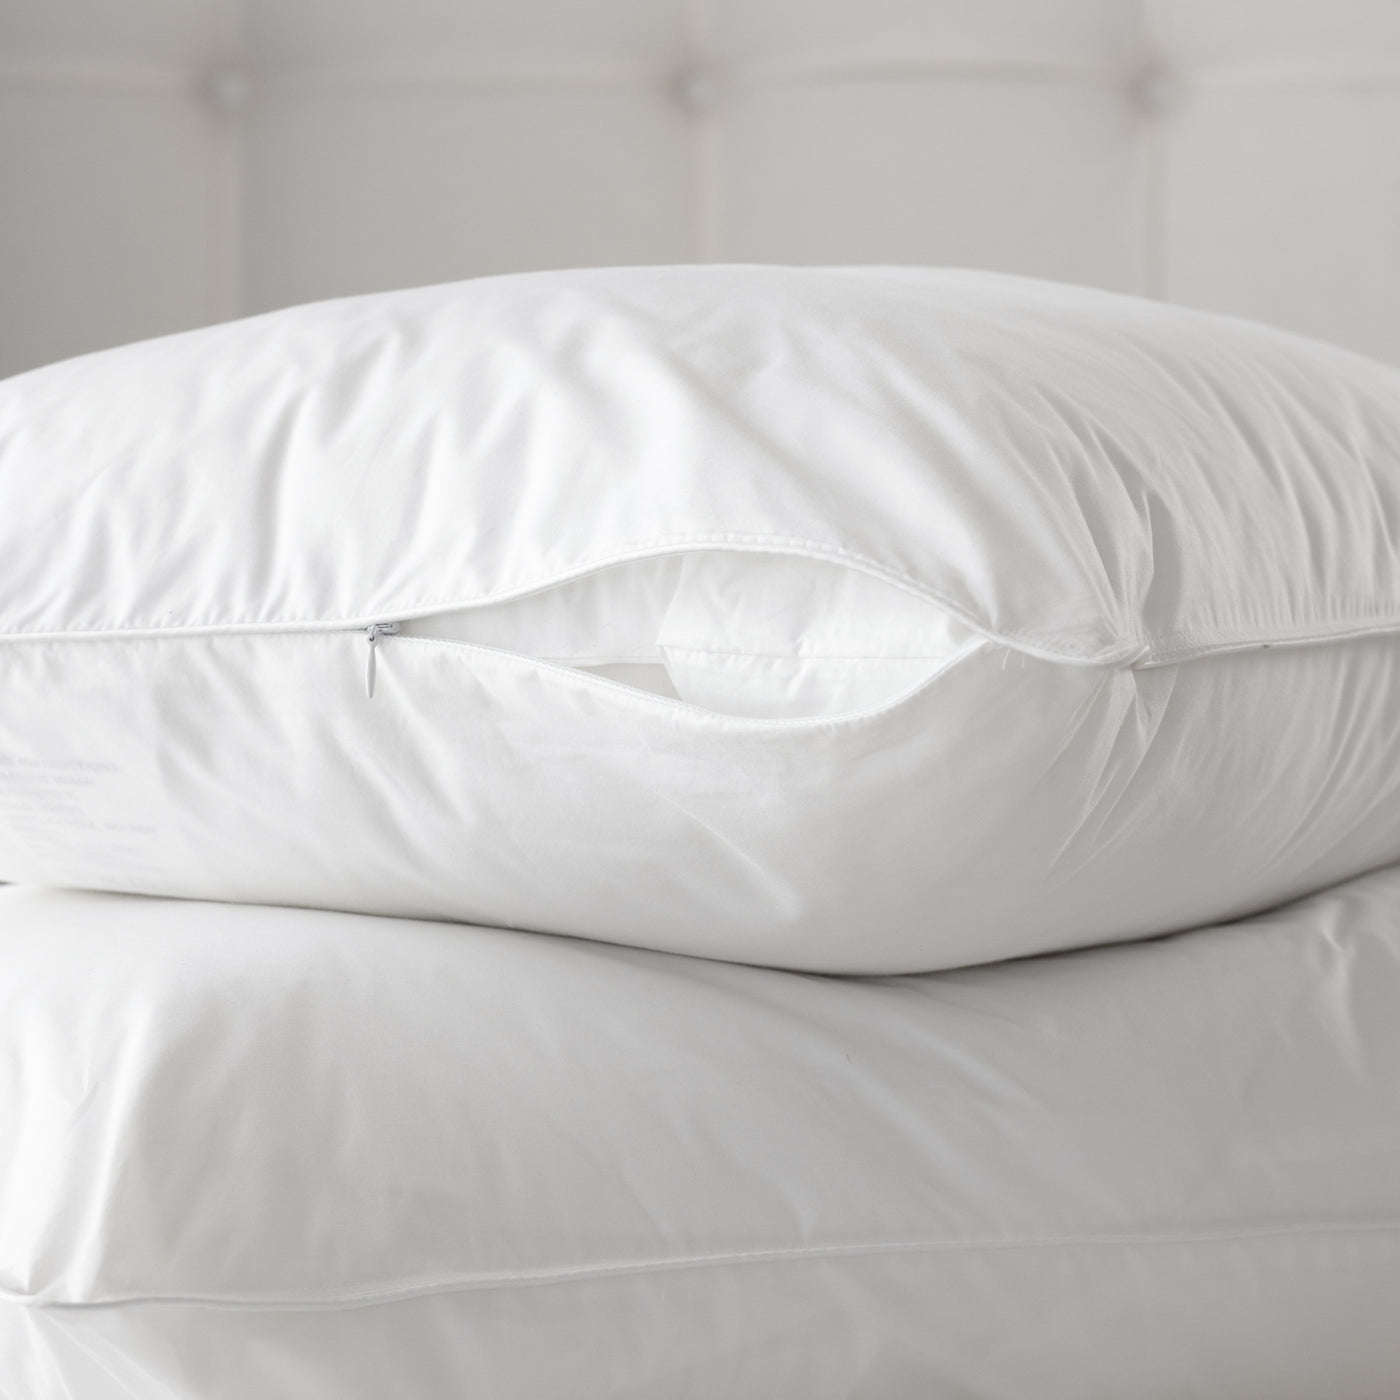 King Sleeping Pillow 20x37 (Medium)